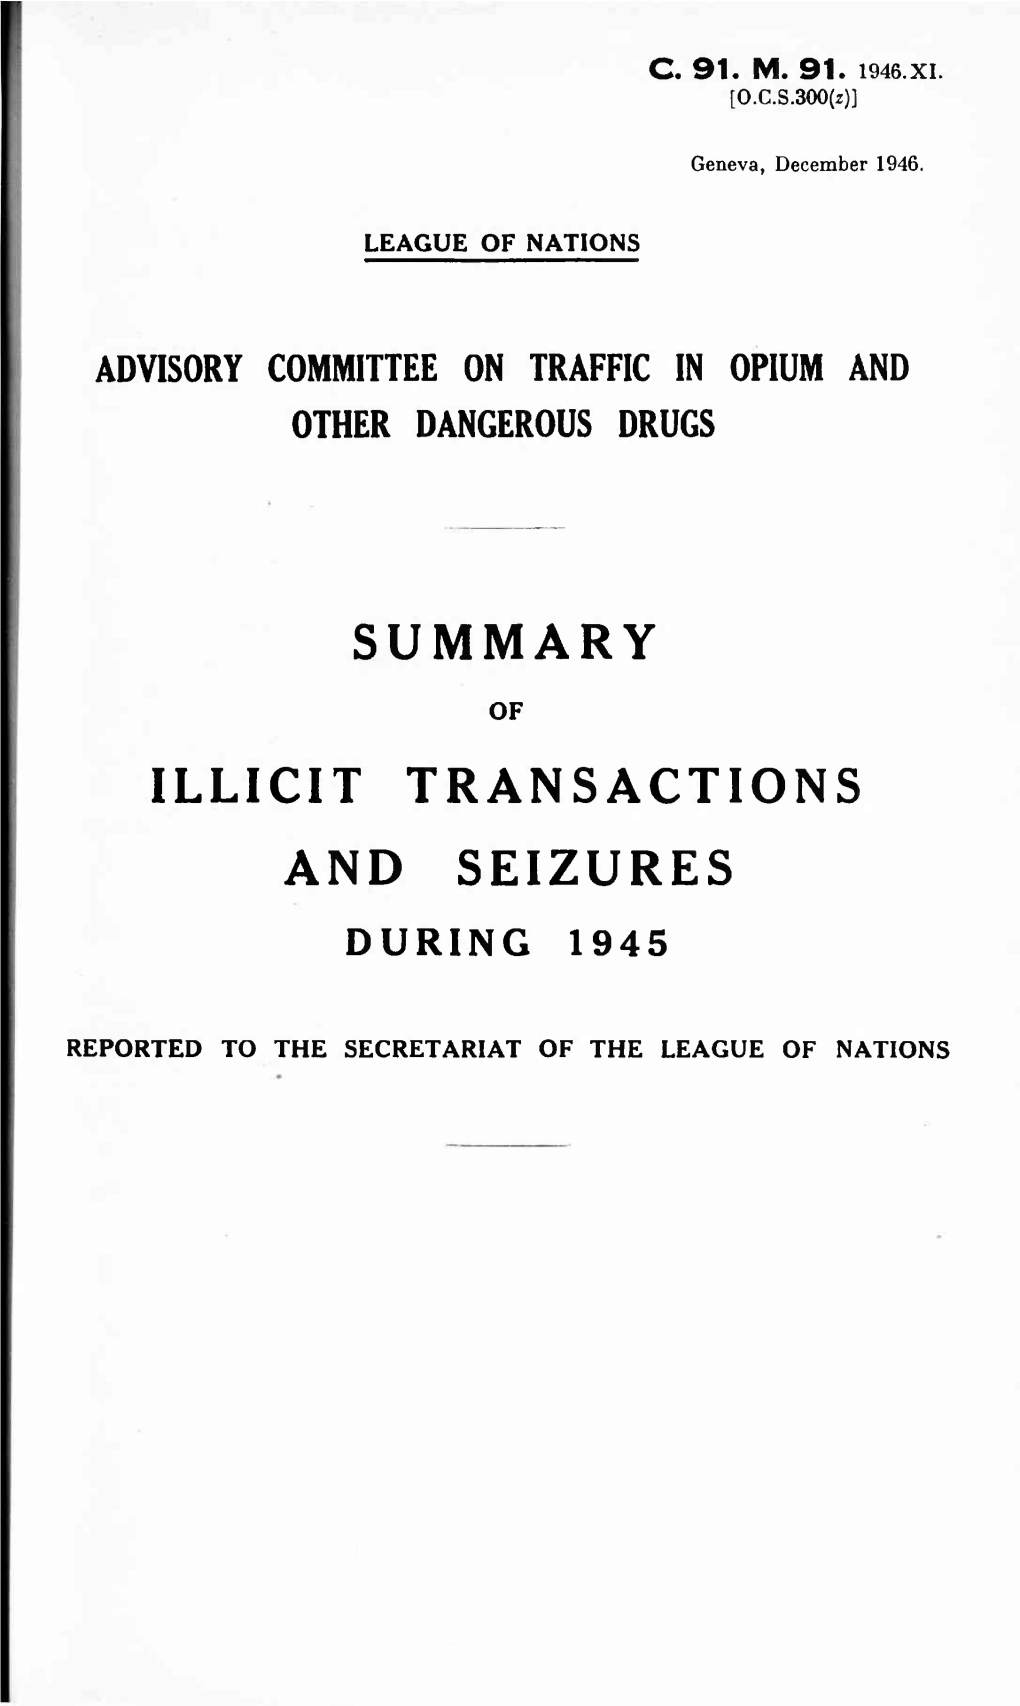 Summary Illicit Transactions and Seizures